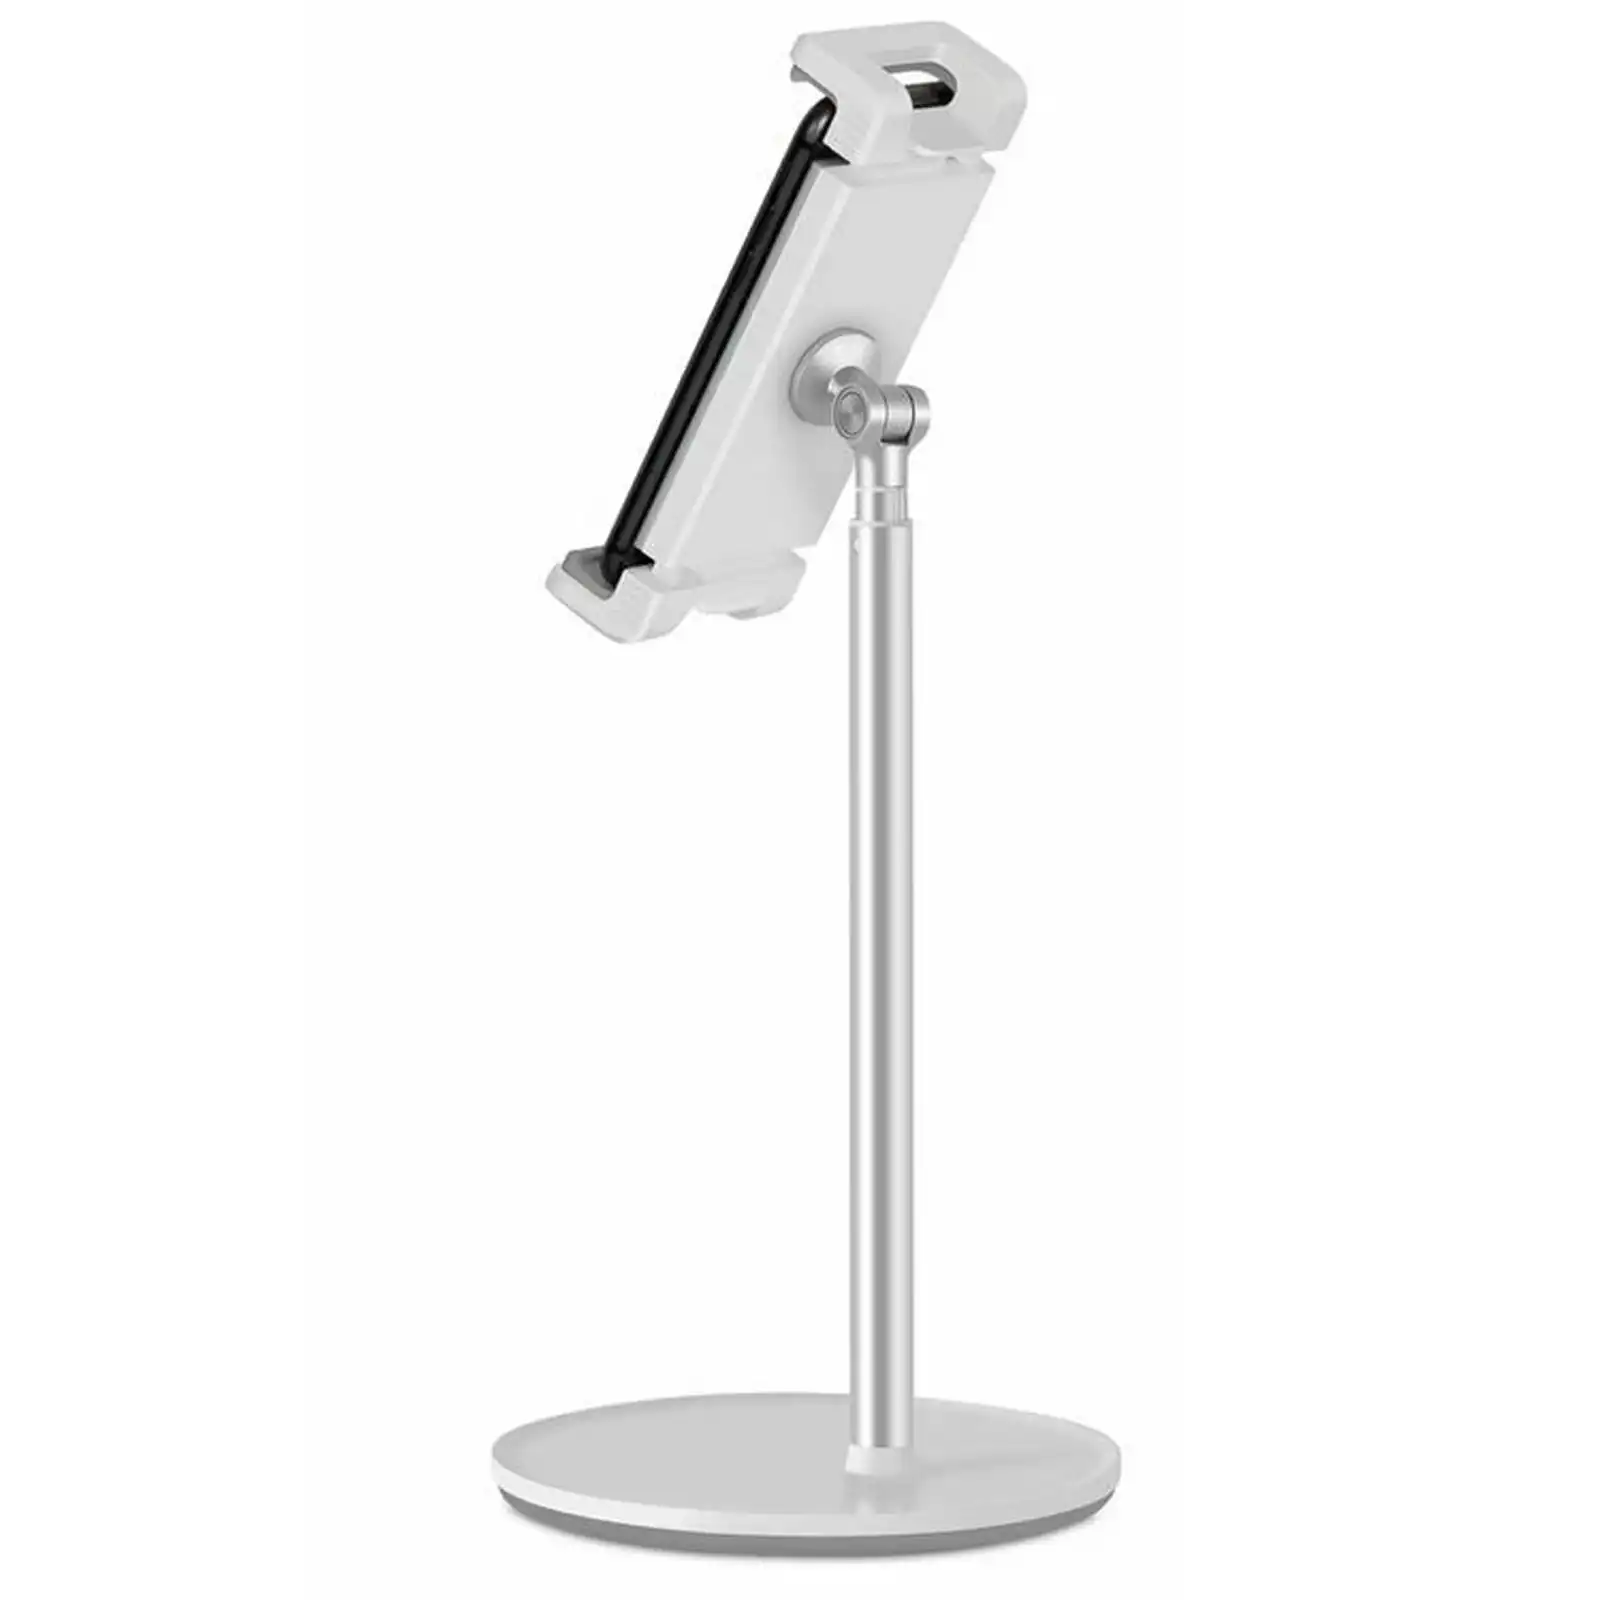 TODO Aluminium Tablet Stand Mount Holder Telescopic Arm Bracket iPhone iPad 4.7-12.9